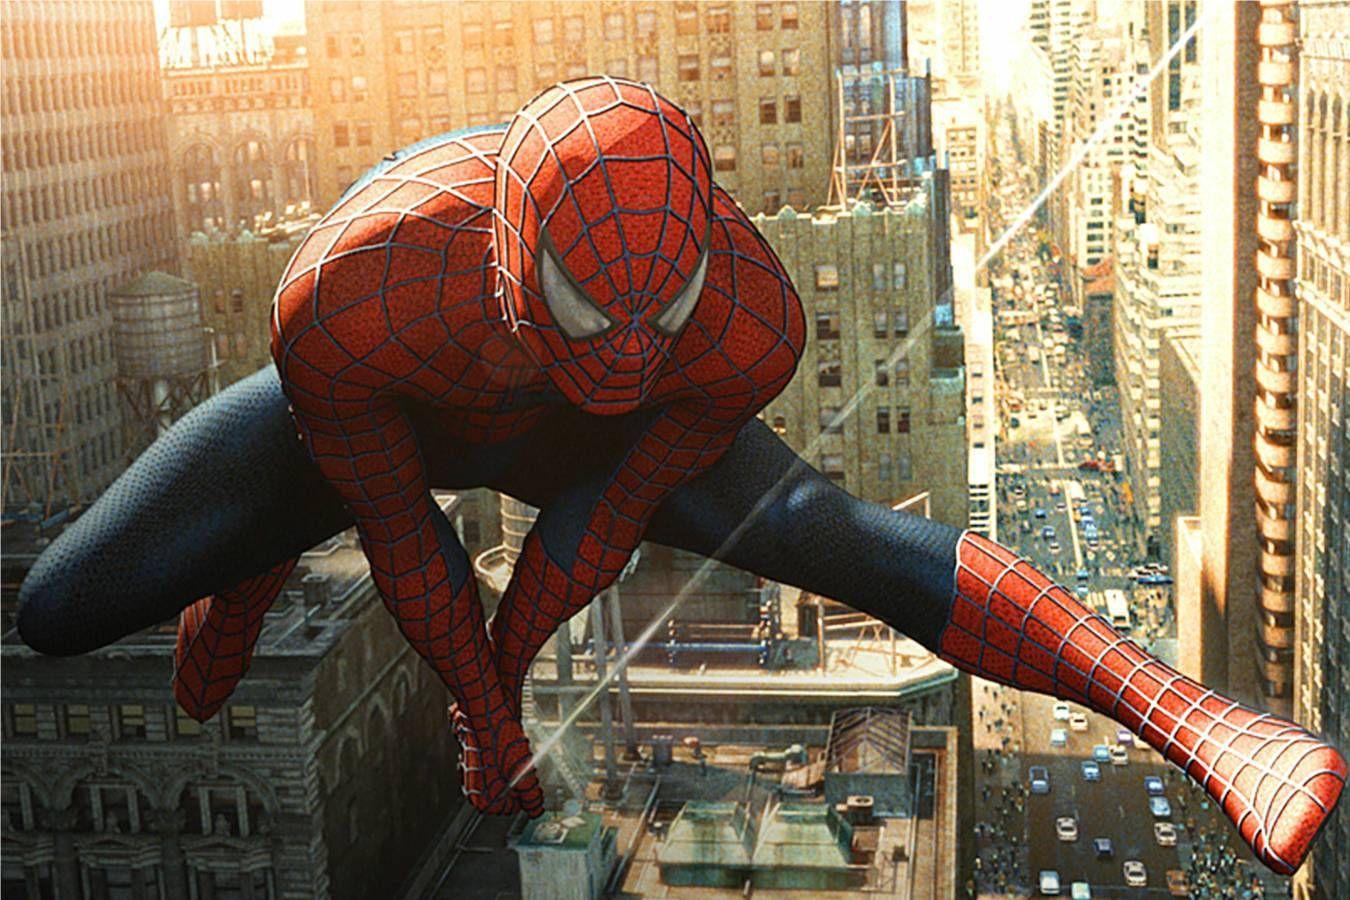 Amazing Spider Man Artwork. Marvel's The Amazing Spider Man